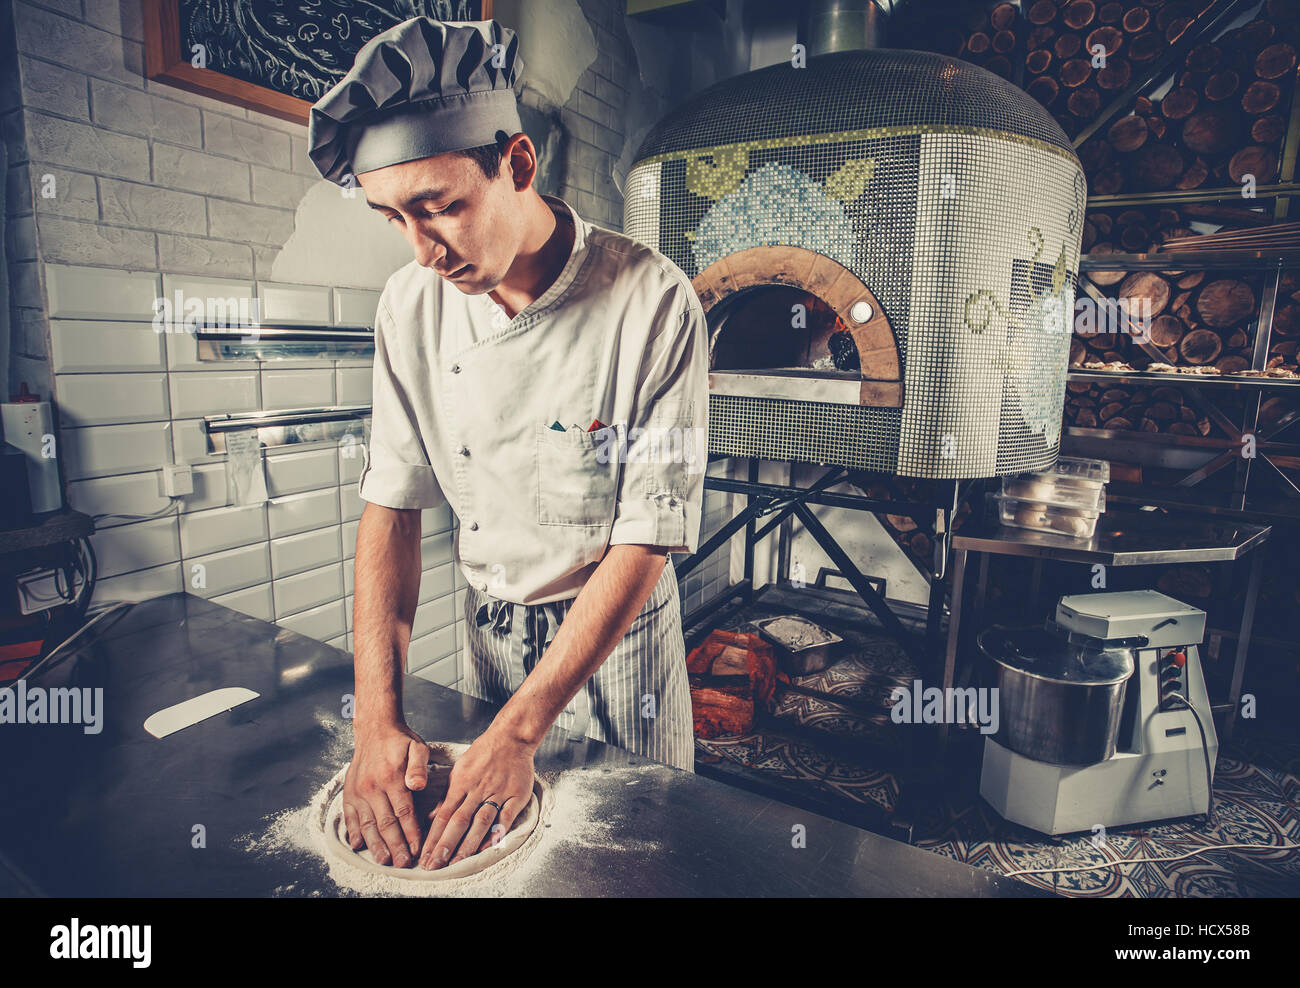 Young chef preparing dough Stock Photo